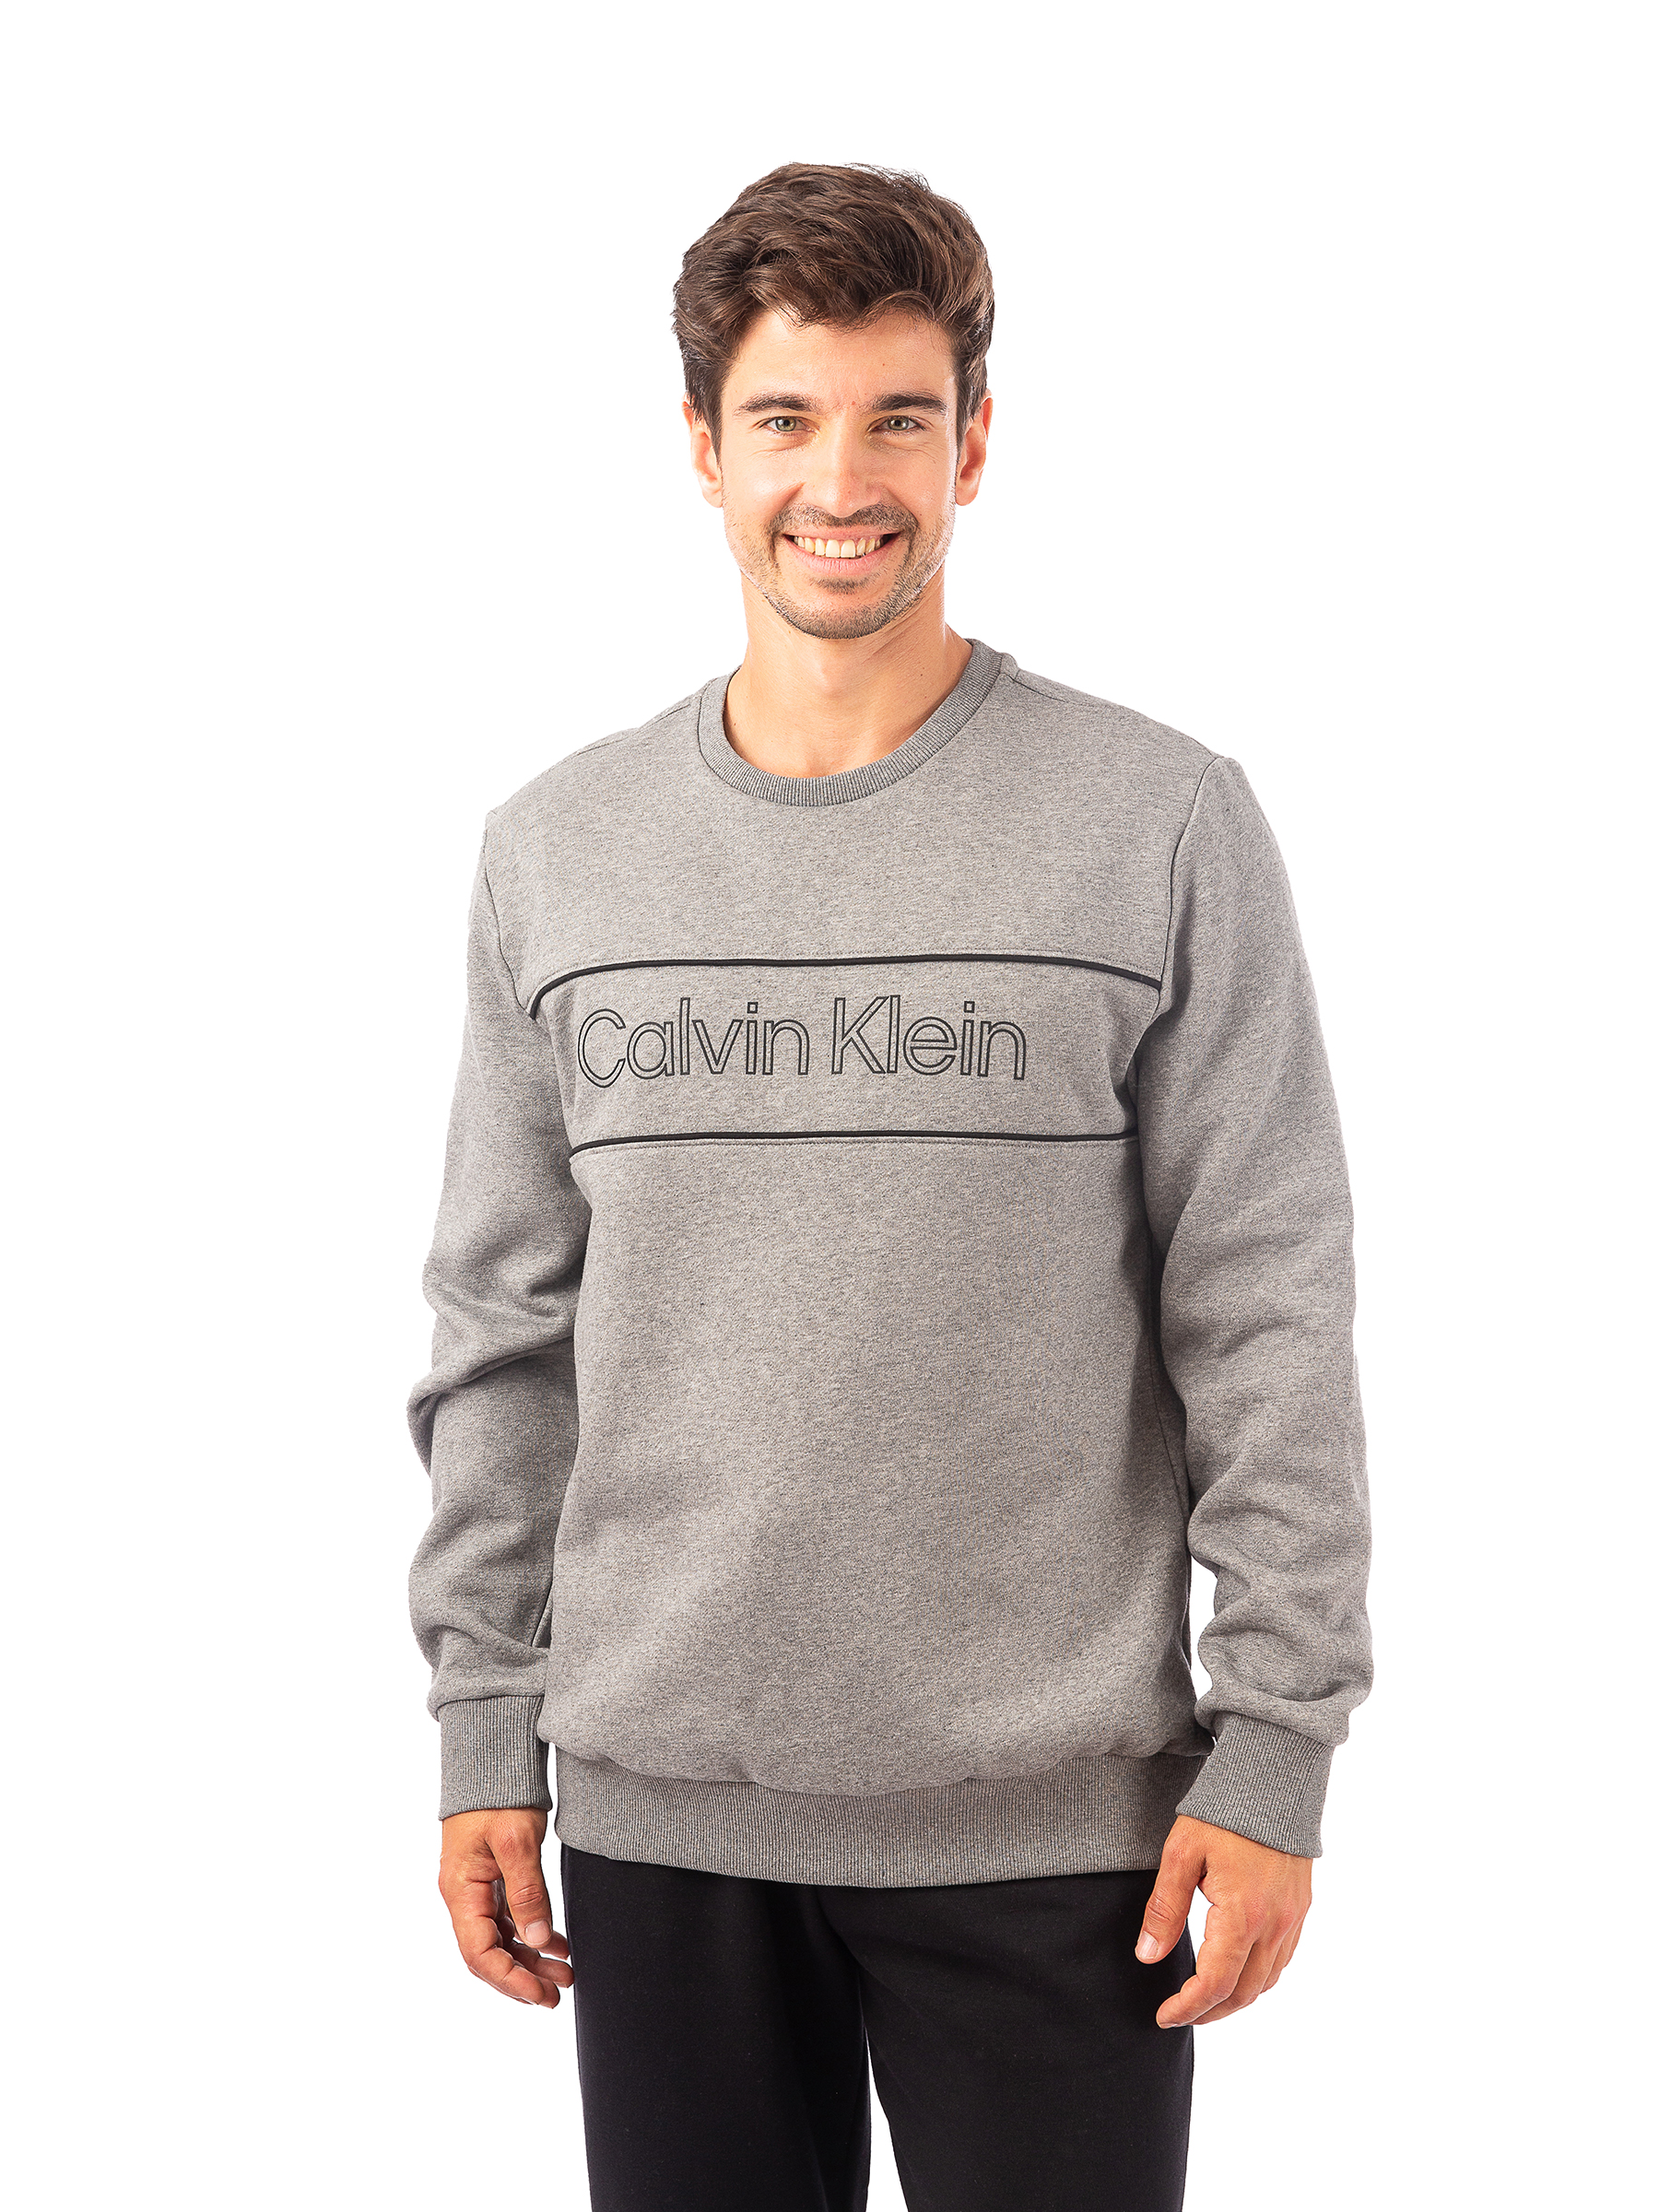 Свитшот мужской Calvin Klein 40J6242 серый L